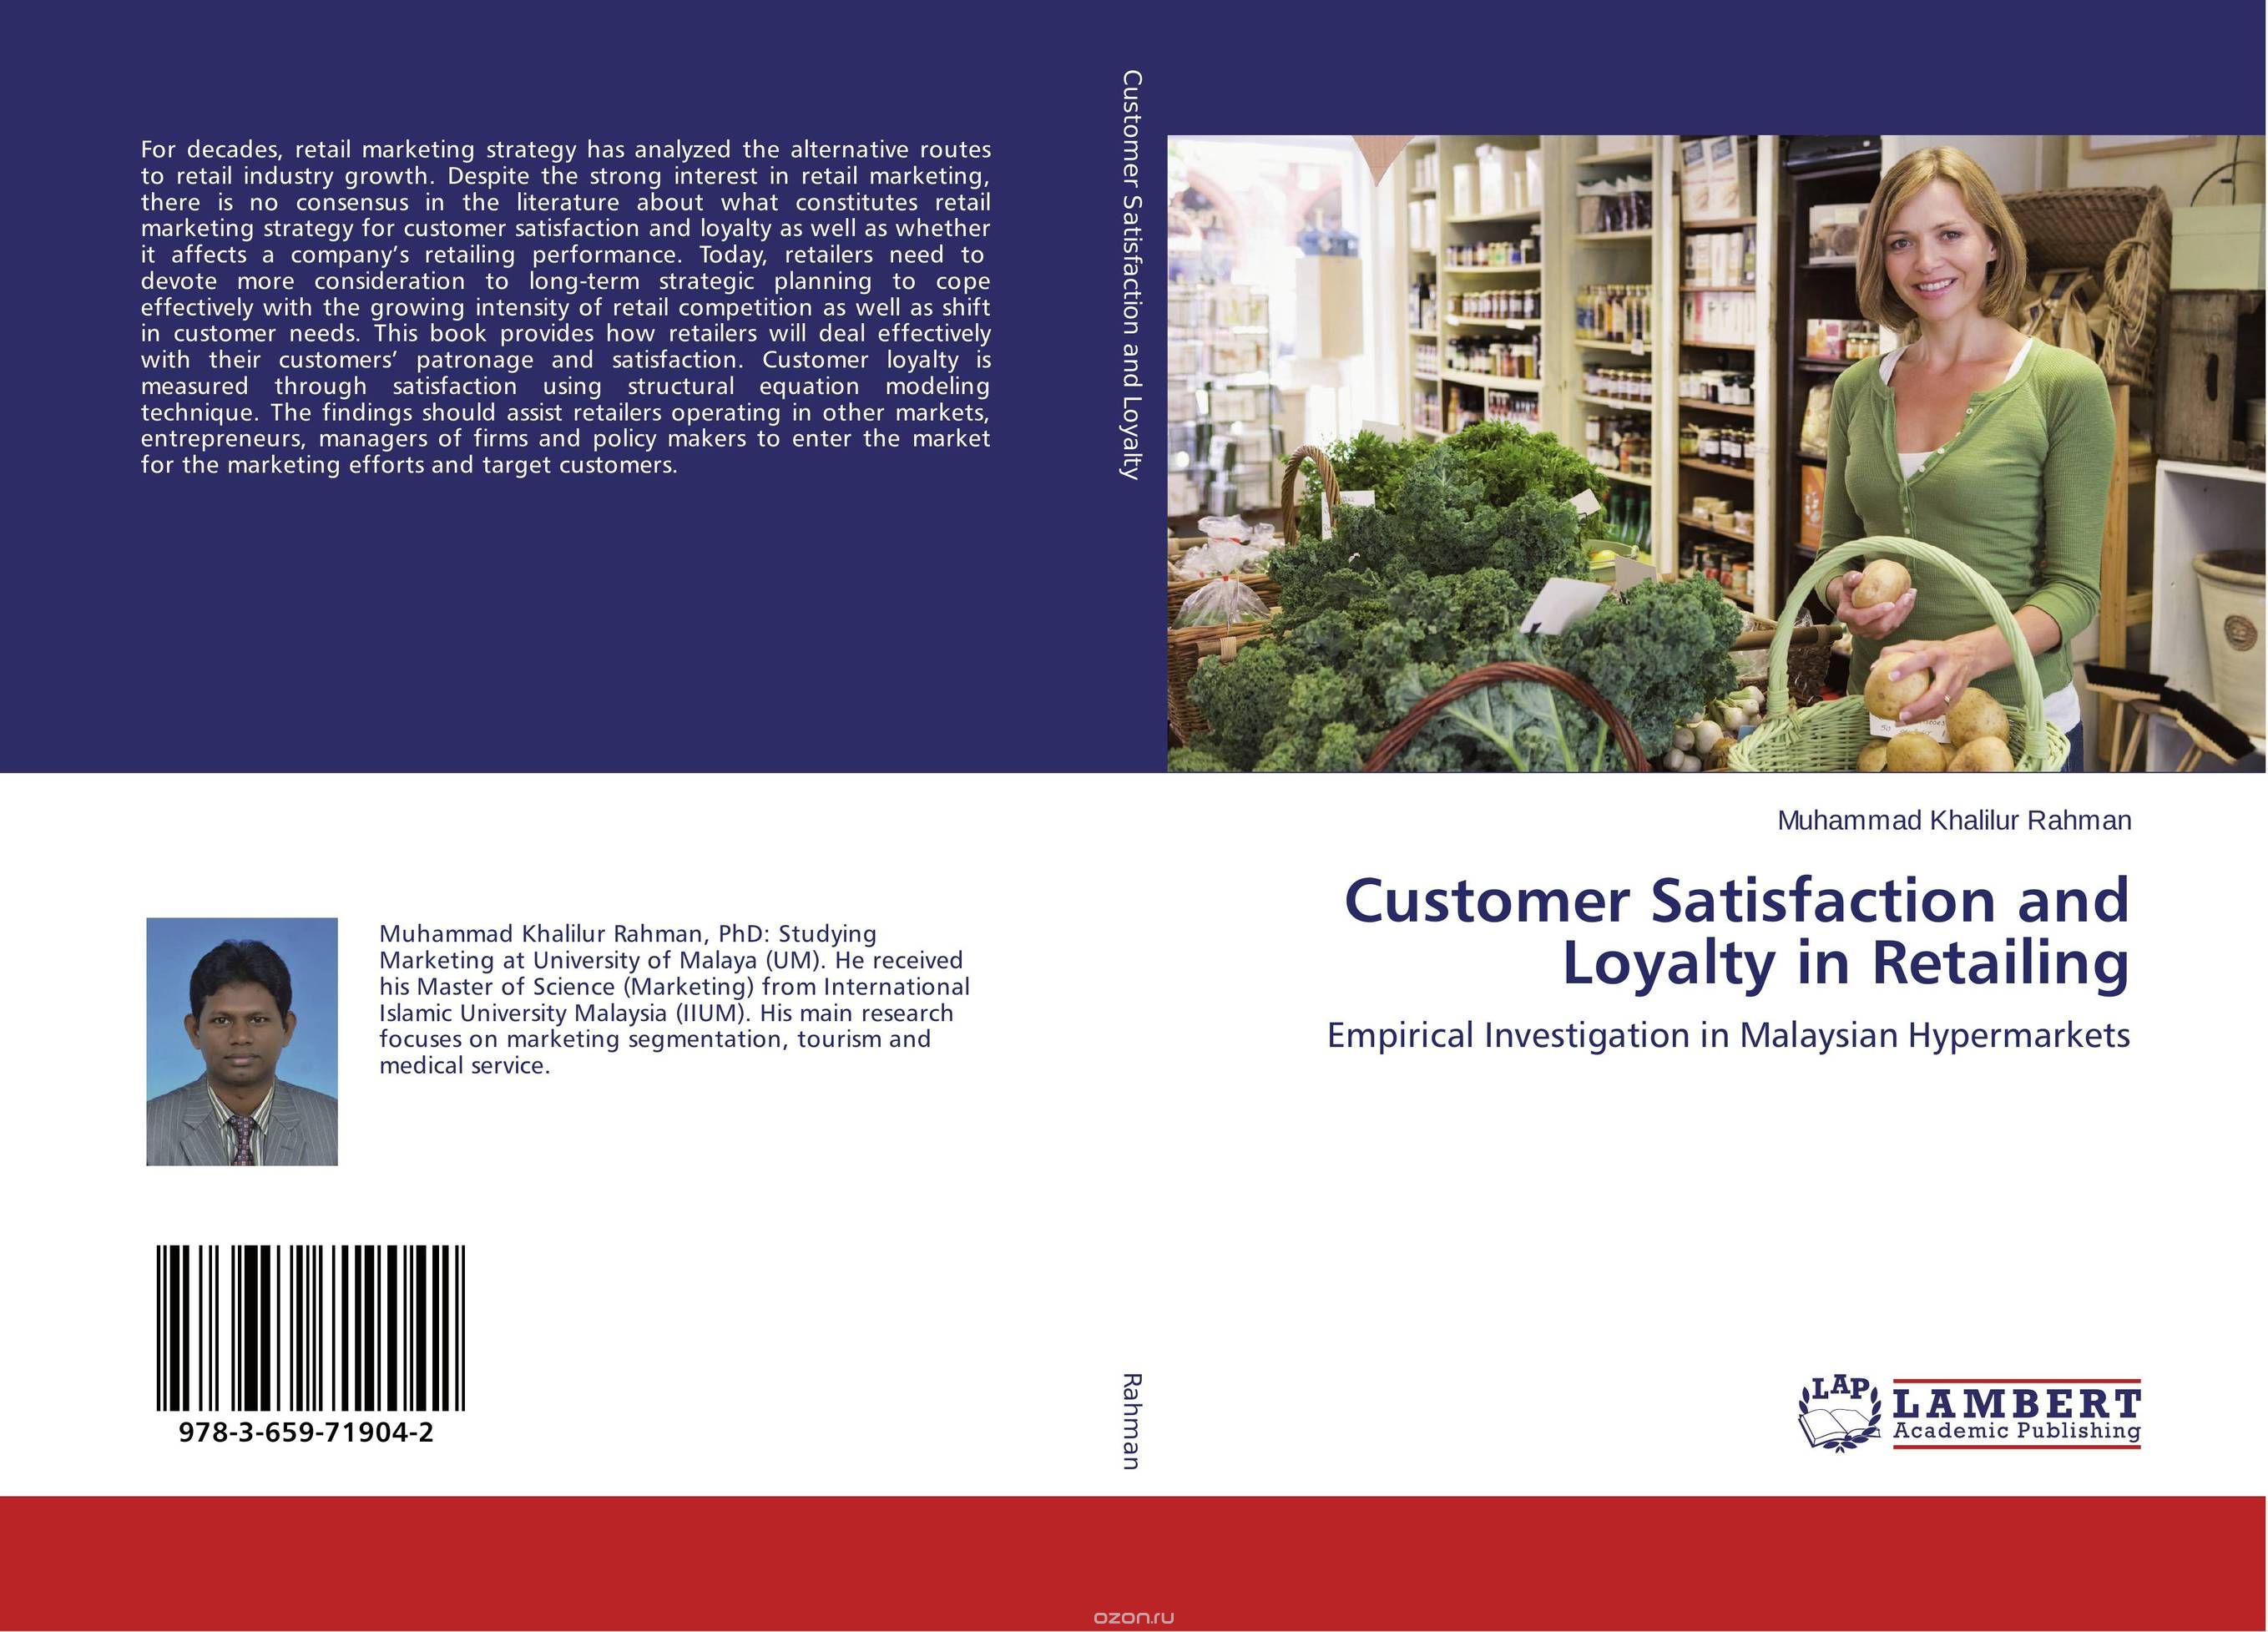 Скачать книгу "Customer Satisfaction and Loyalty in Retailing"